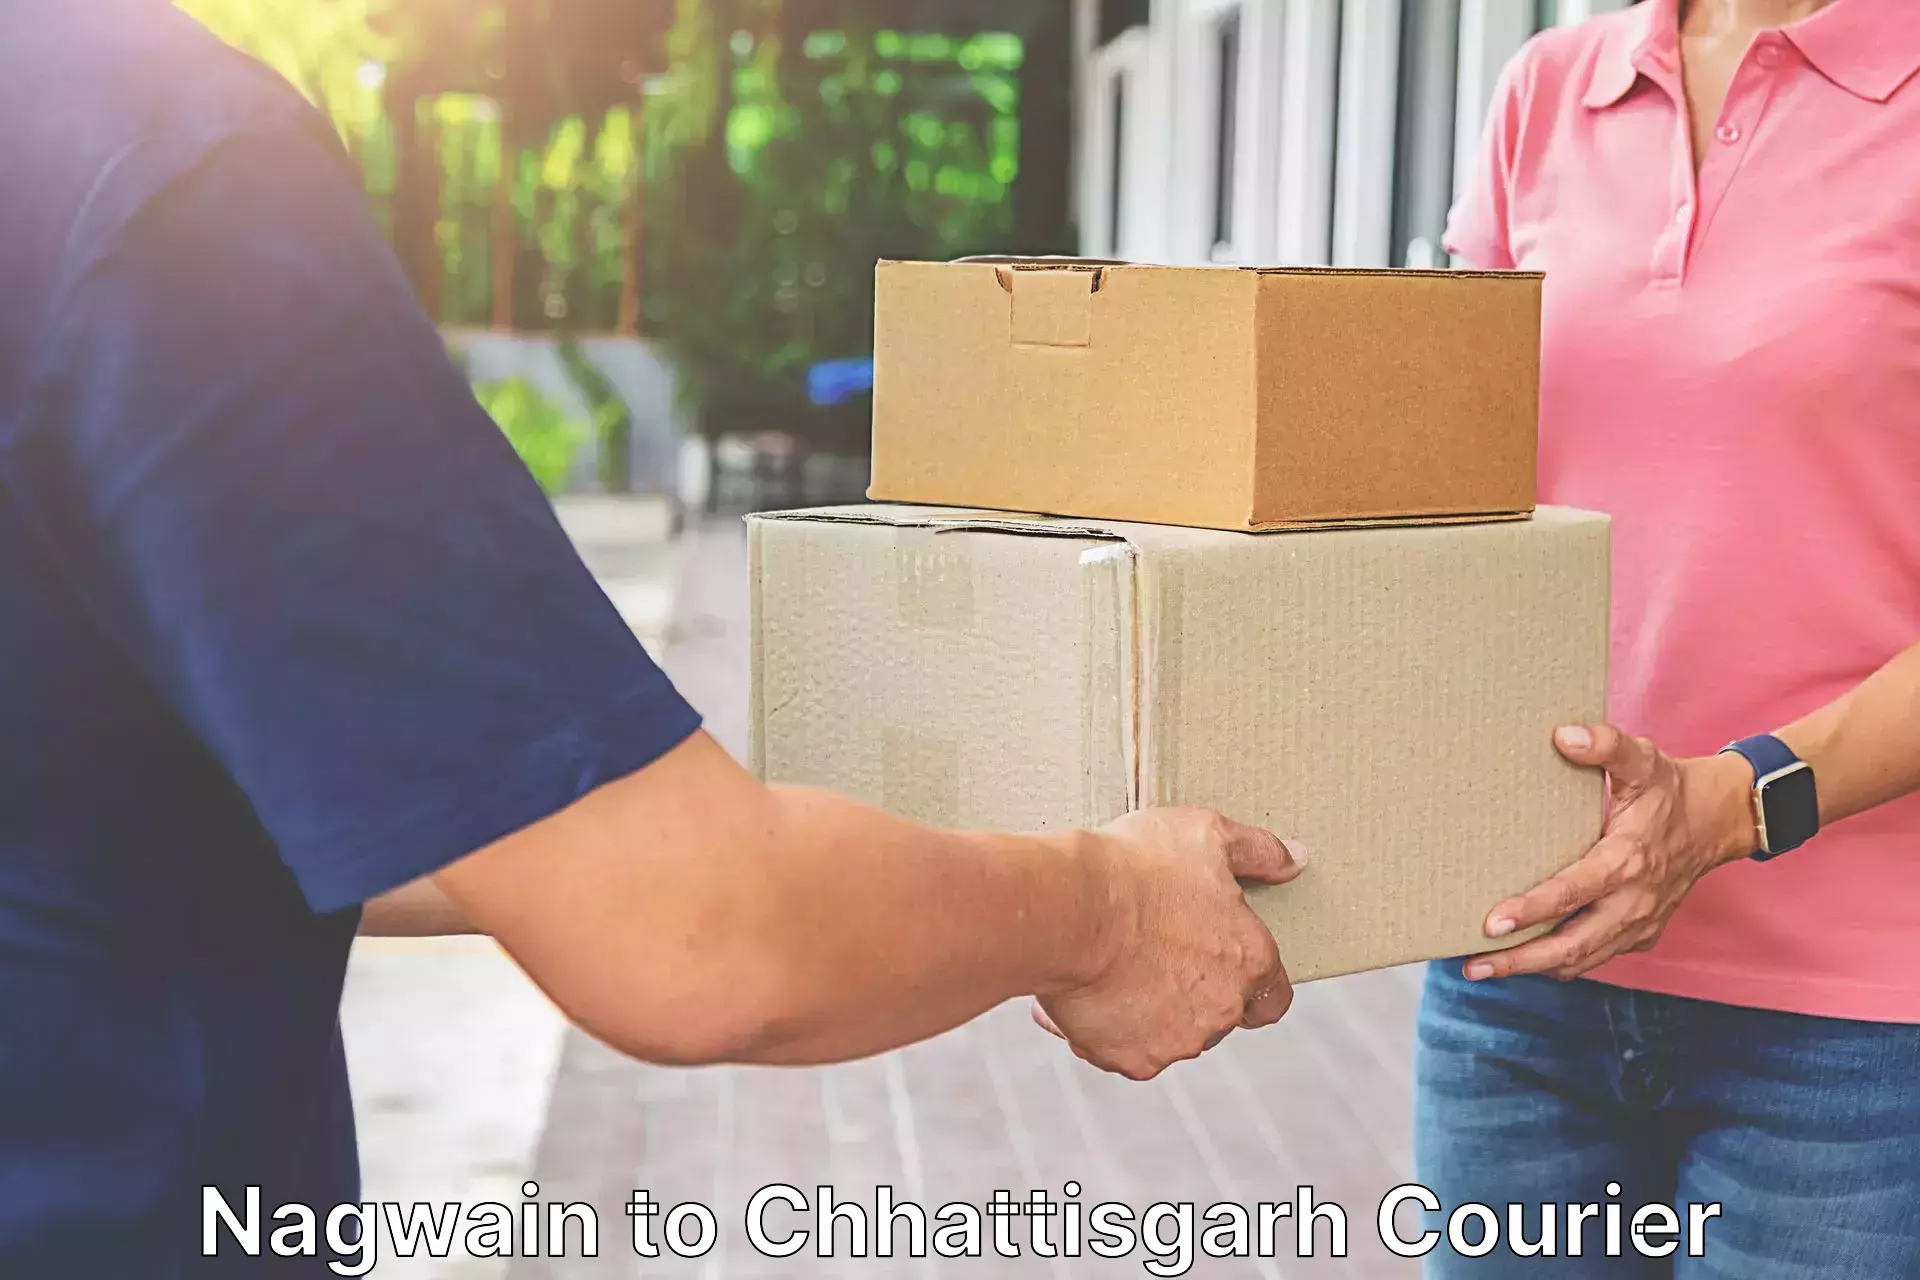 State-of-the-art courier technology Nagwain to Chhattisgarh